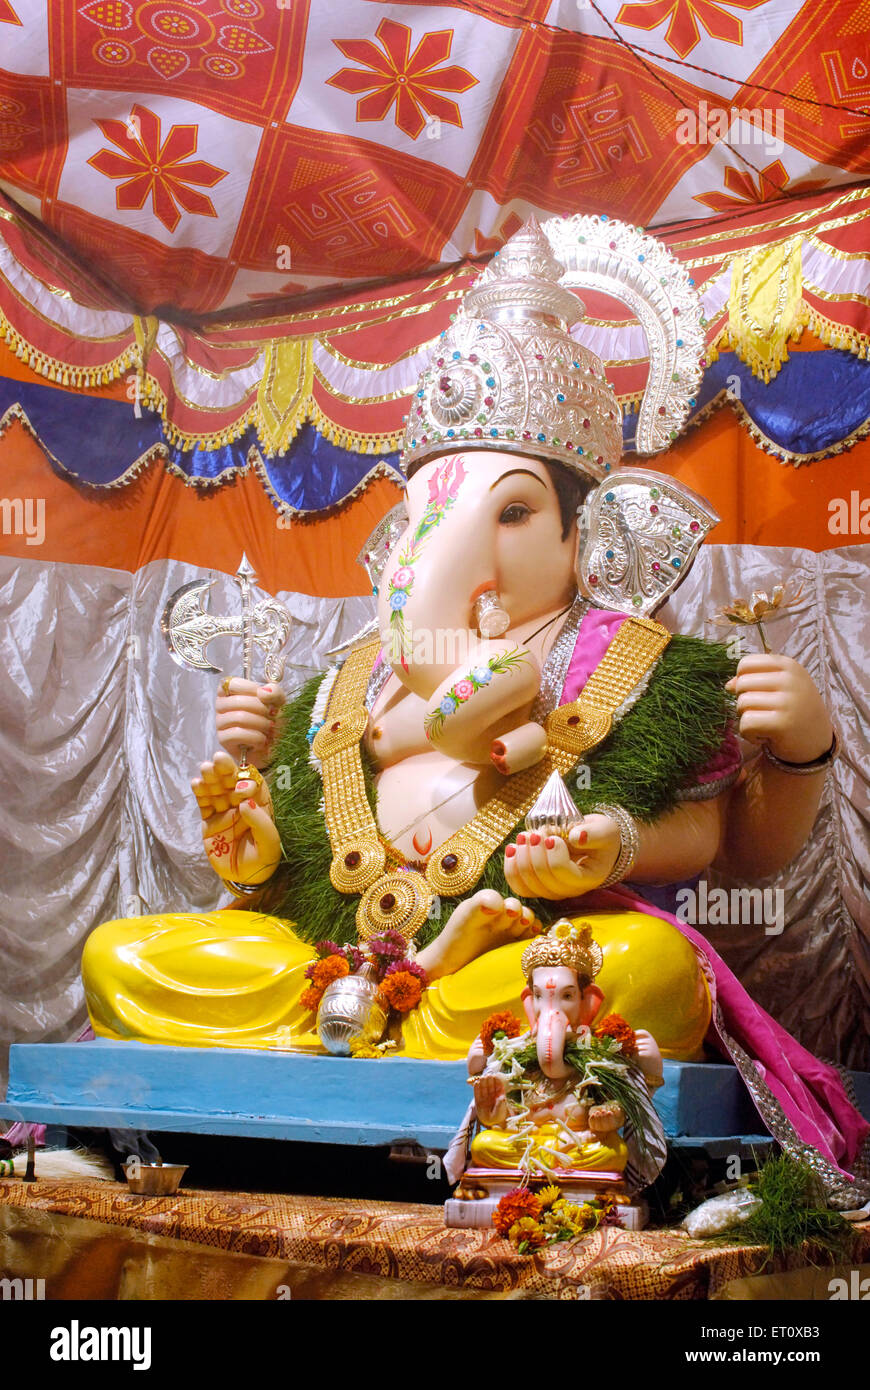 Richly decorated idol of lord Ganesh elephant headed god of Hindu worshiping for Ganapati festival at Pune Stock Photo